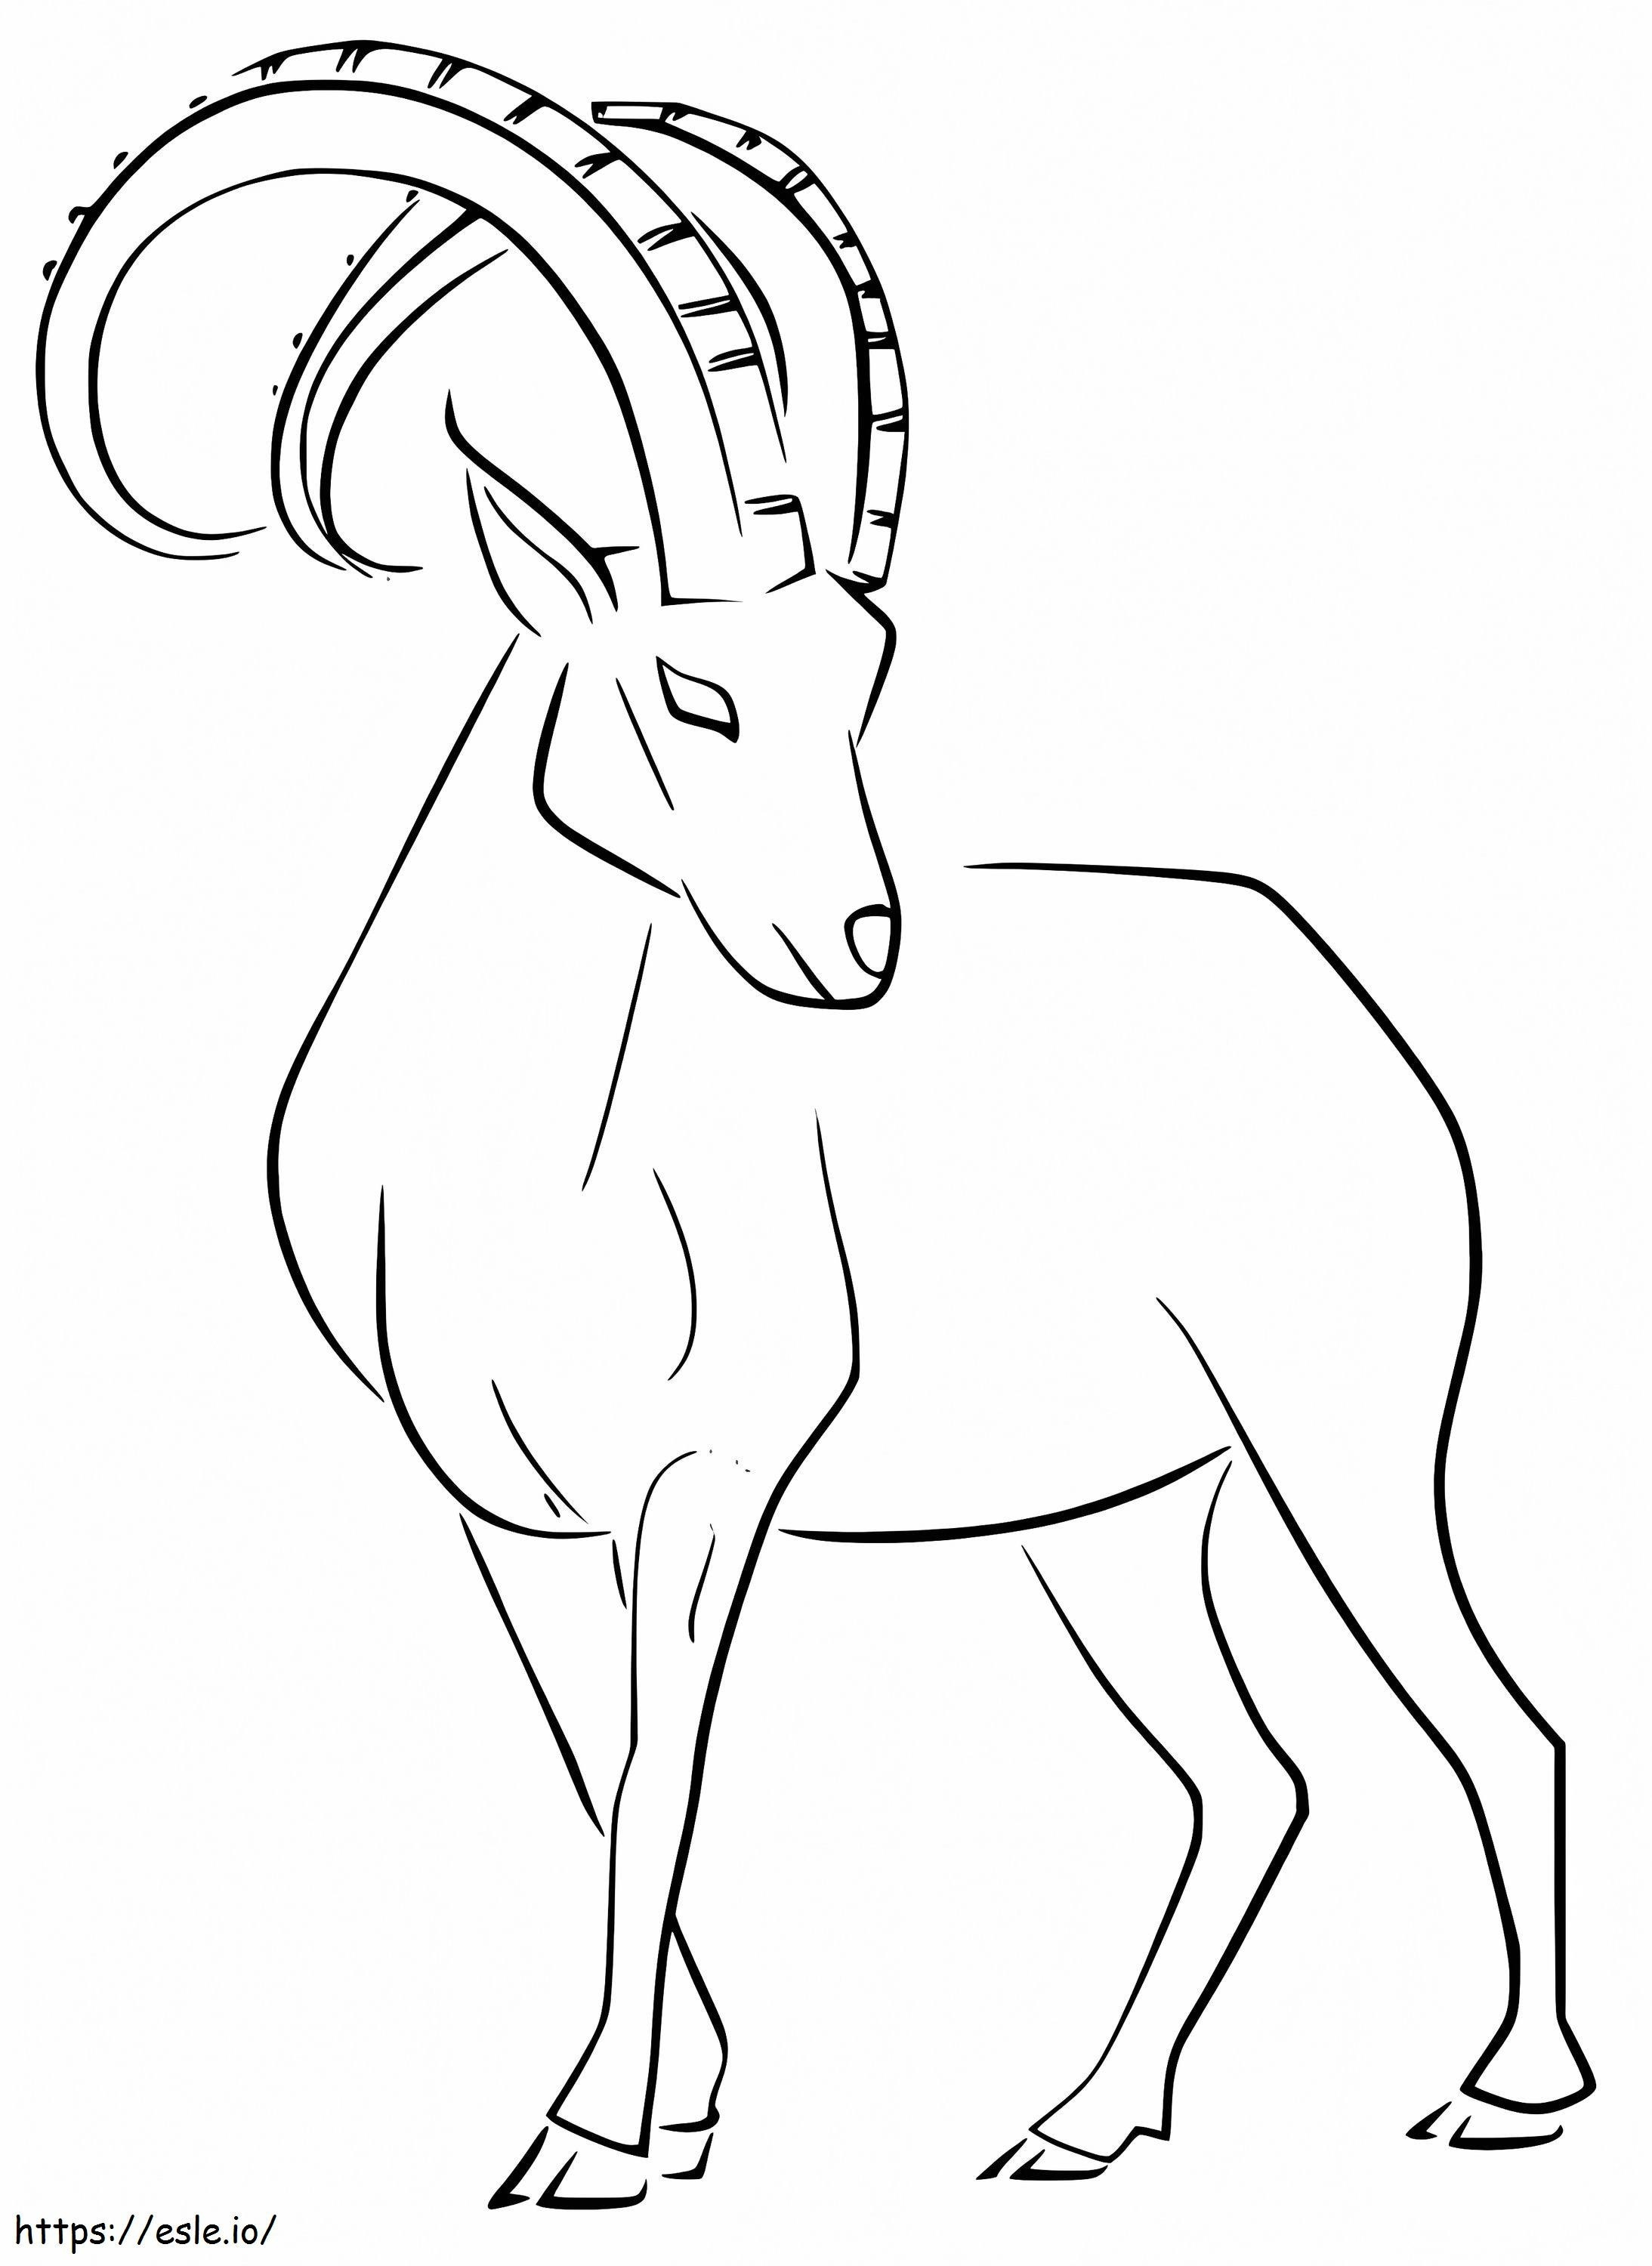 Elegant Ibex coloring page